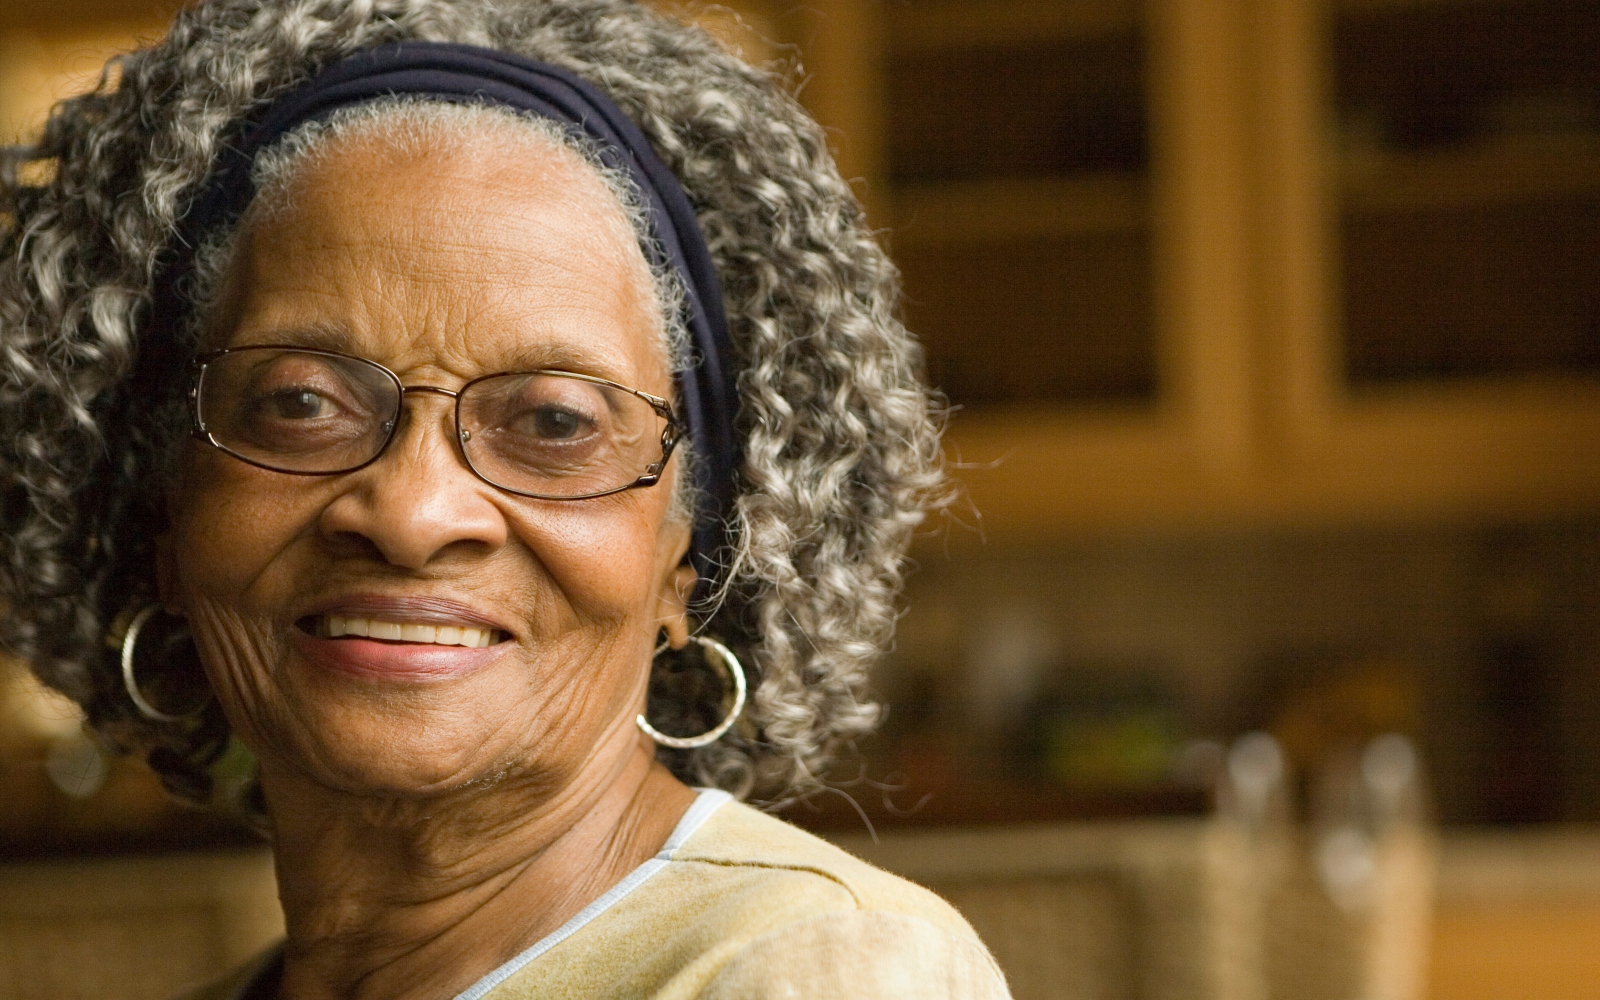 An elderly woman smiles